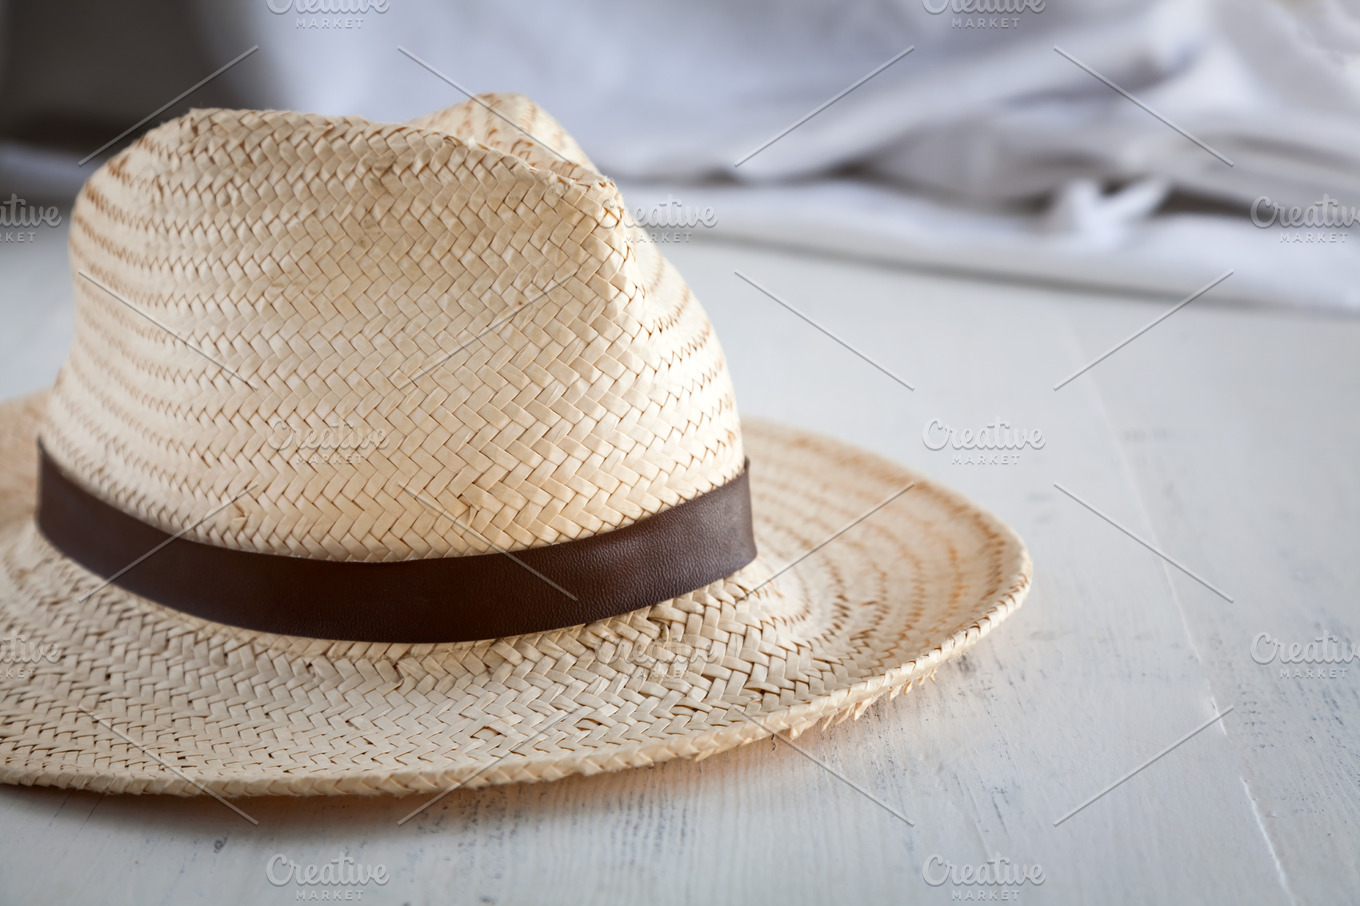 Straw hat on white table ~ Beauty & Fashion Photos ~ Creative Market